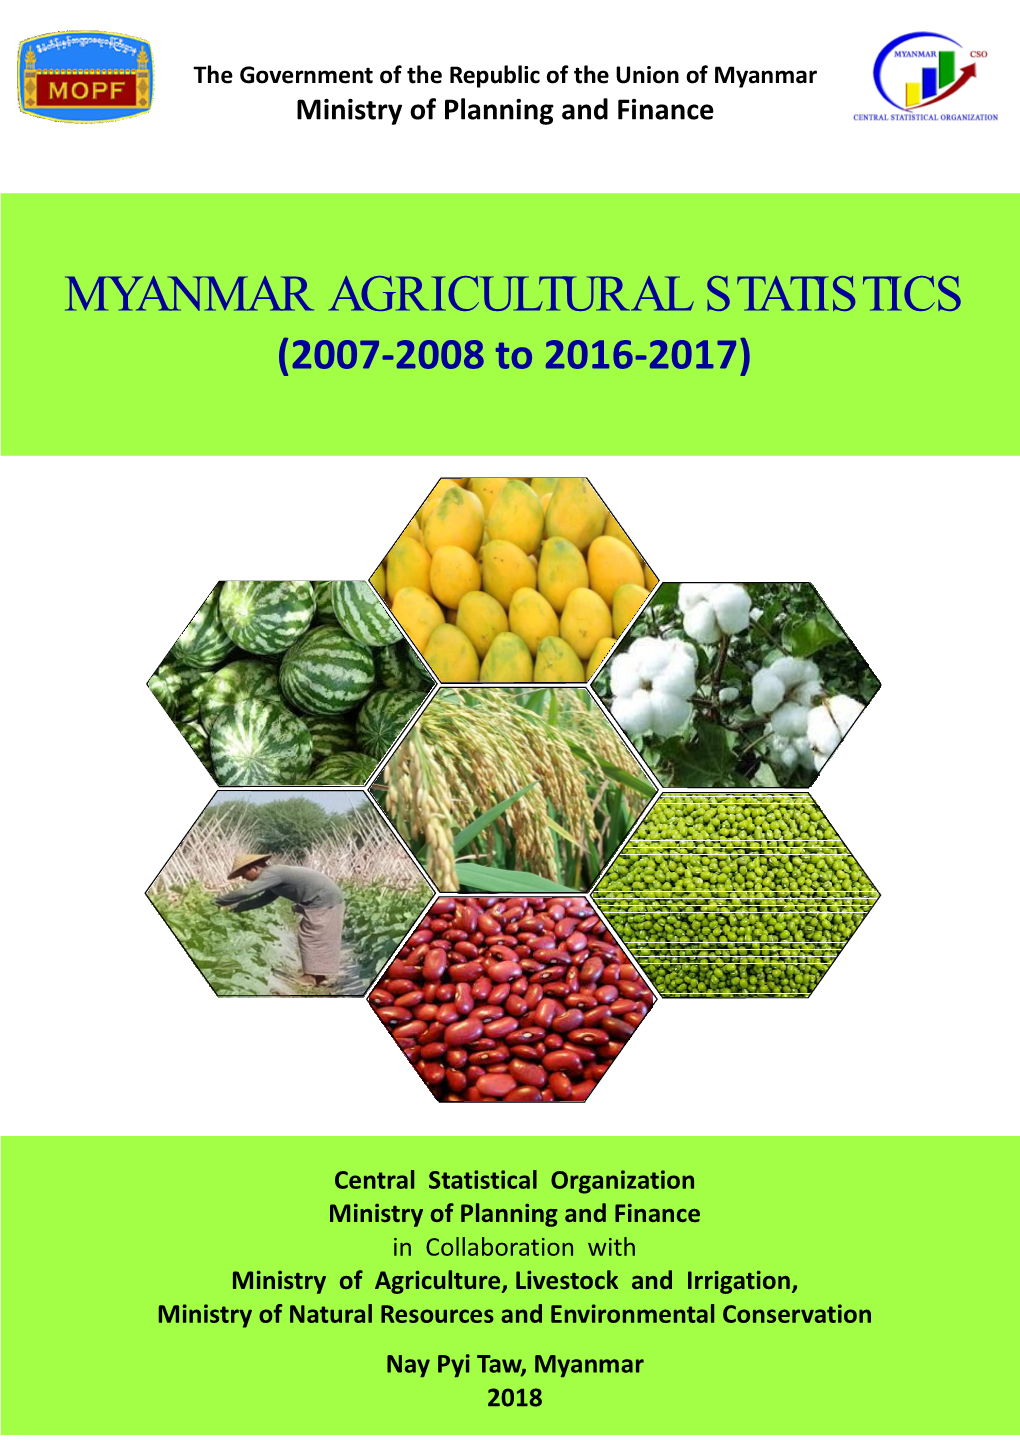 MYANMAR AGRICULTURAL STATISTICS (2007-2008 to 2016-2017)